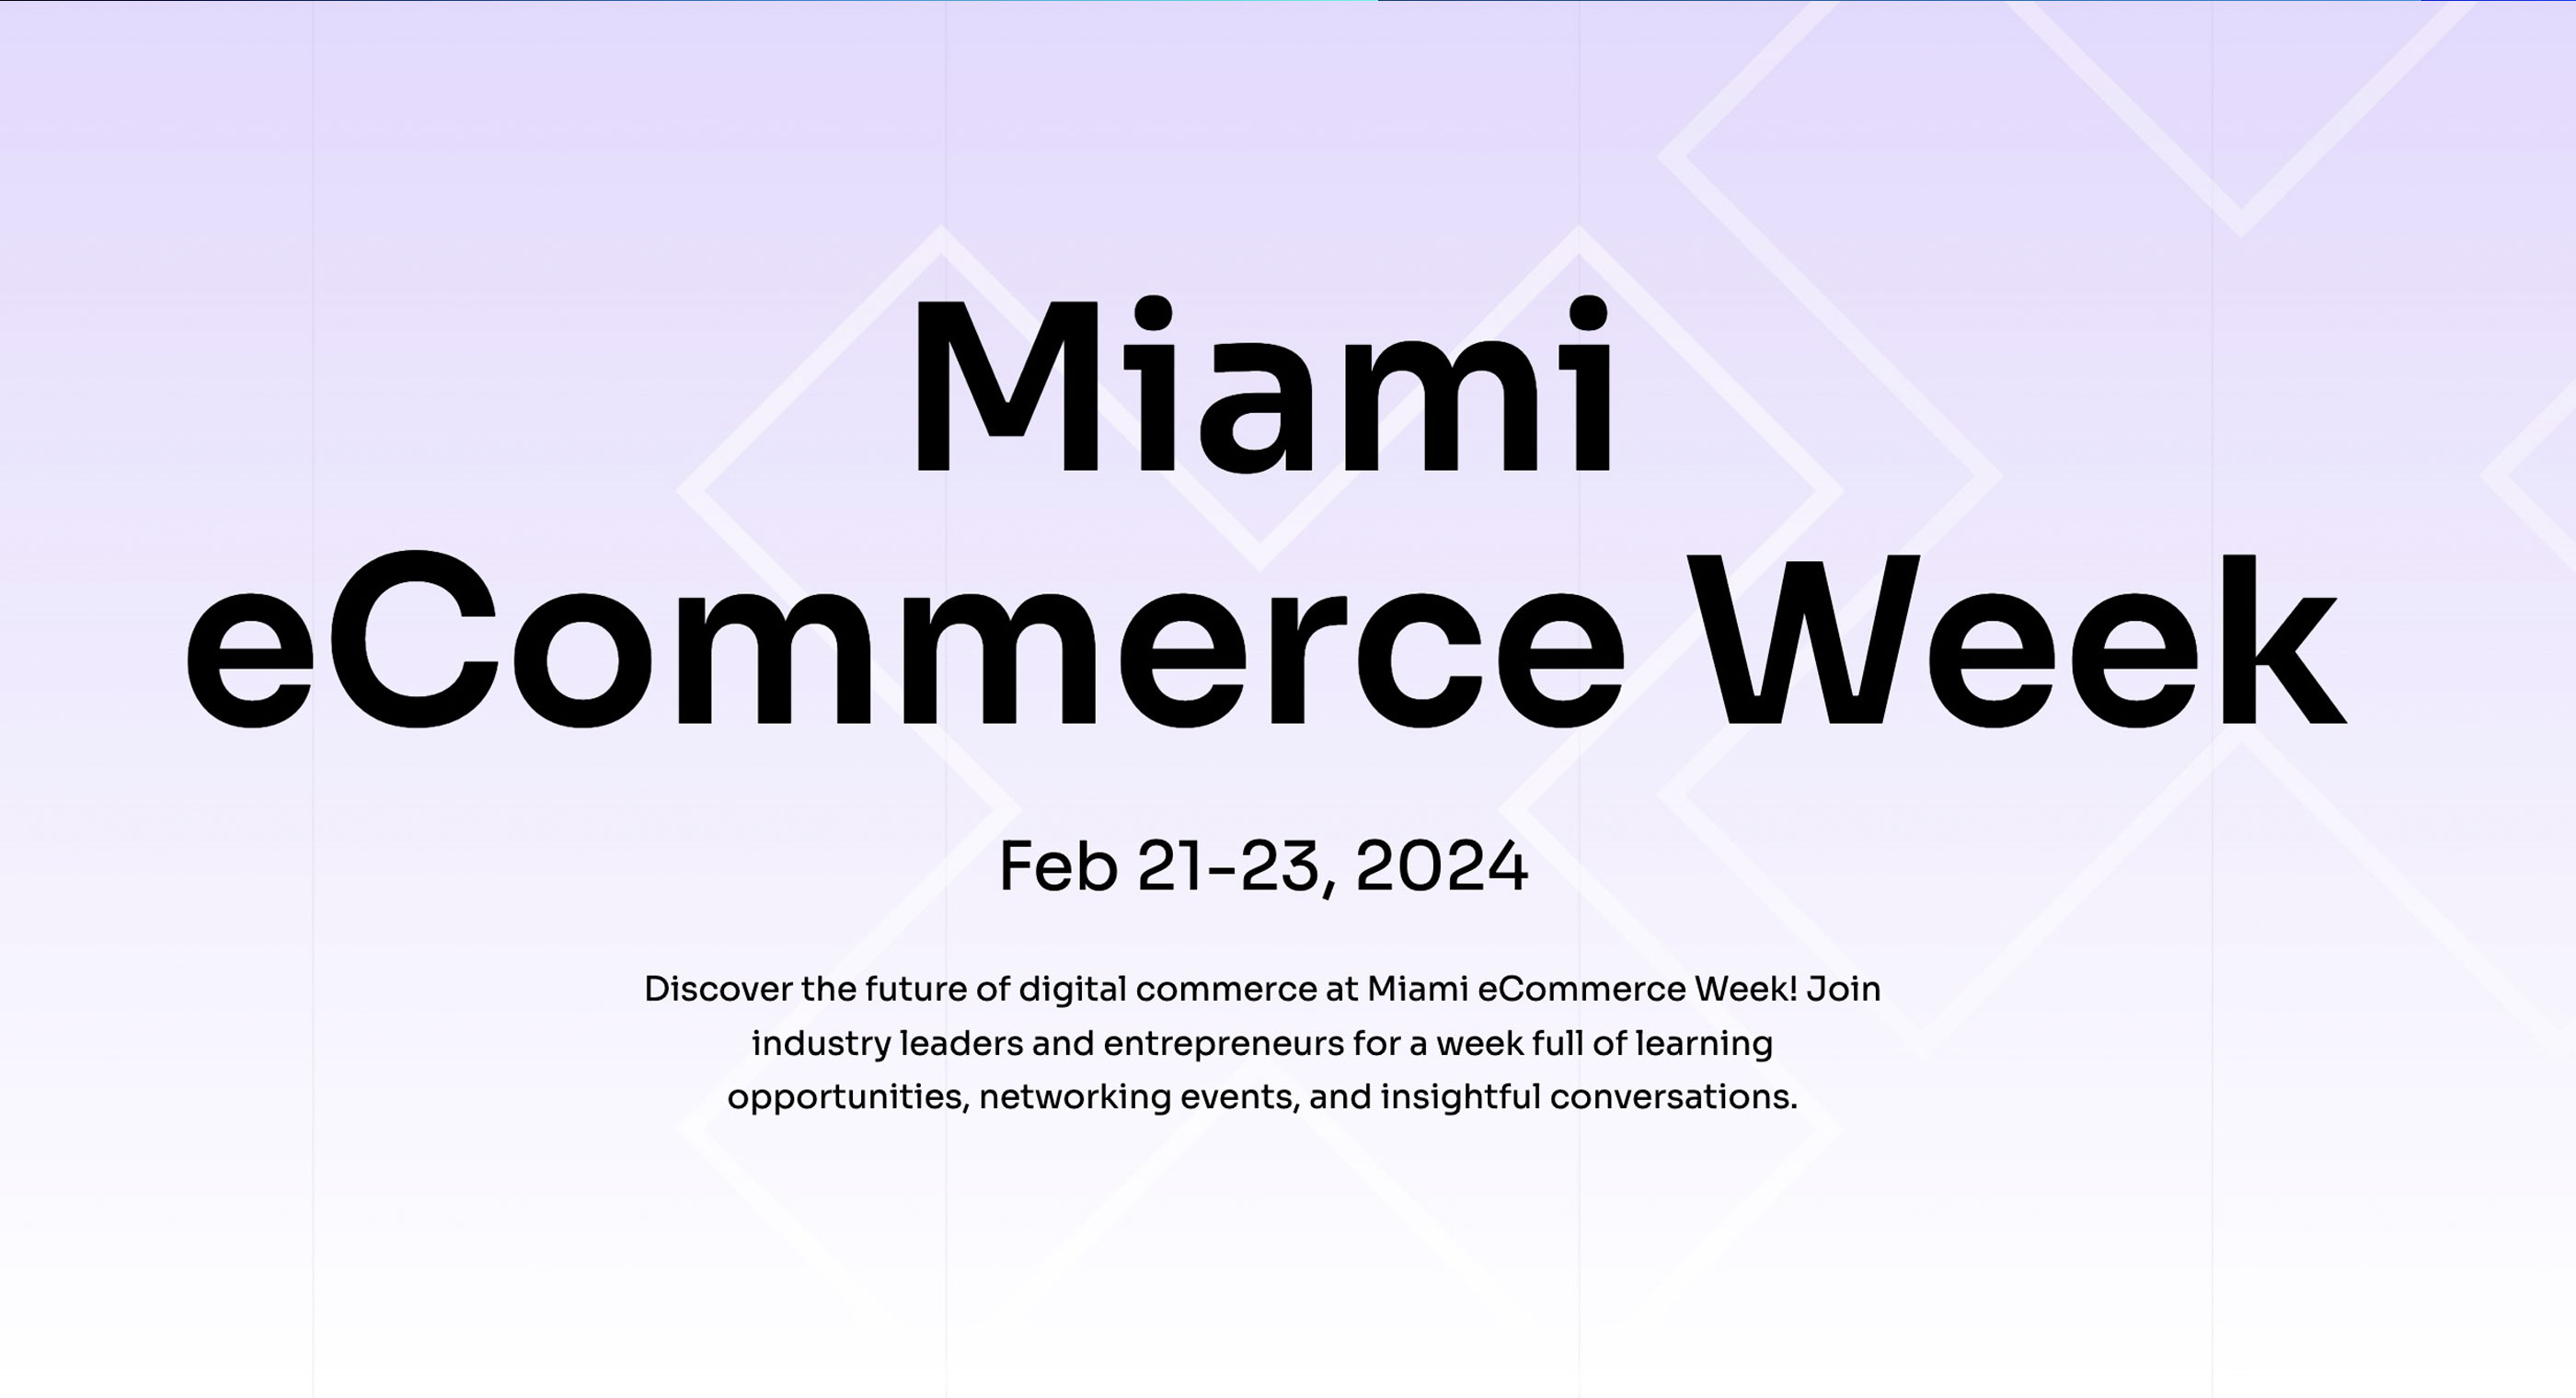 Miami eCommerce Week